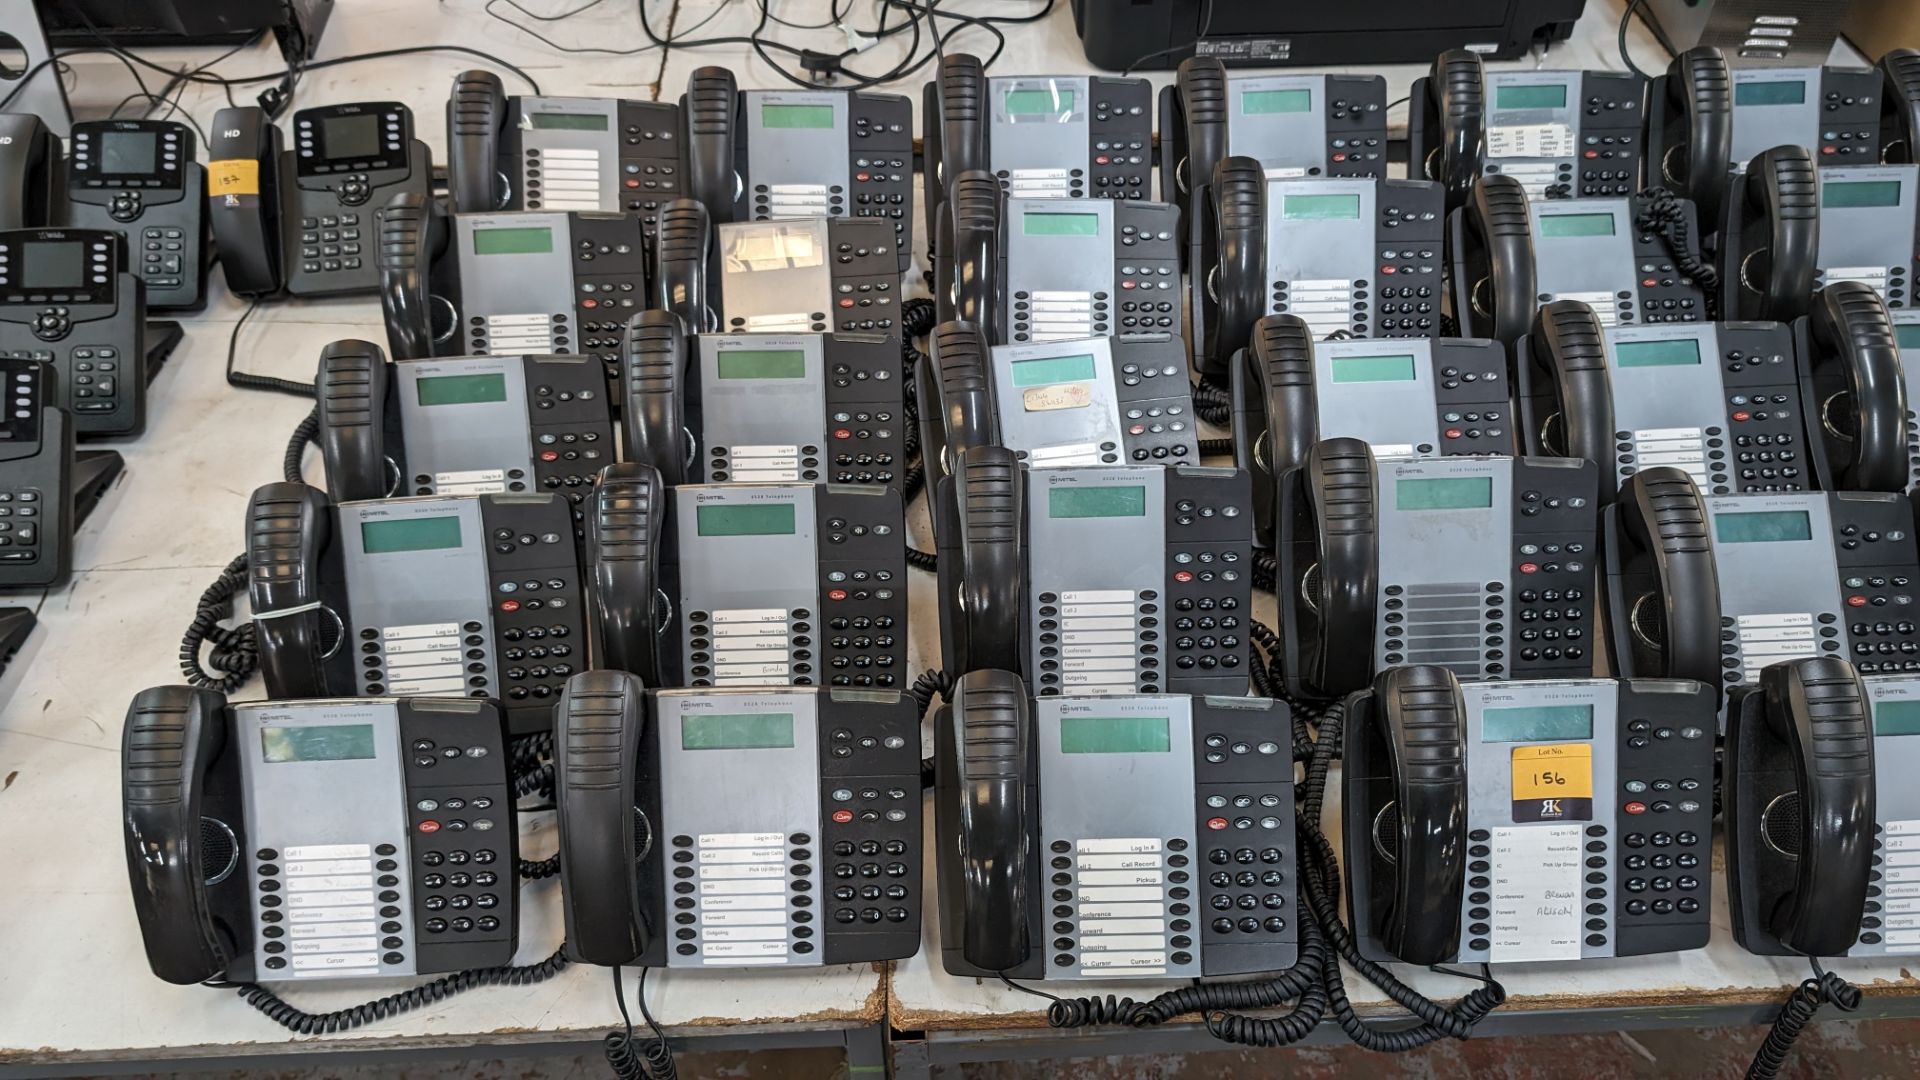 20 off Mitel model 8528 telephone handsets - Image 3 of 13